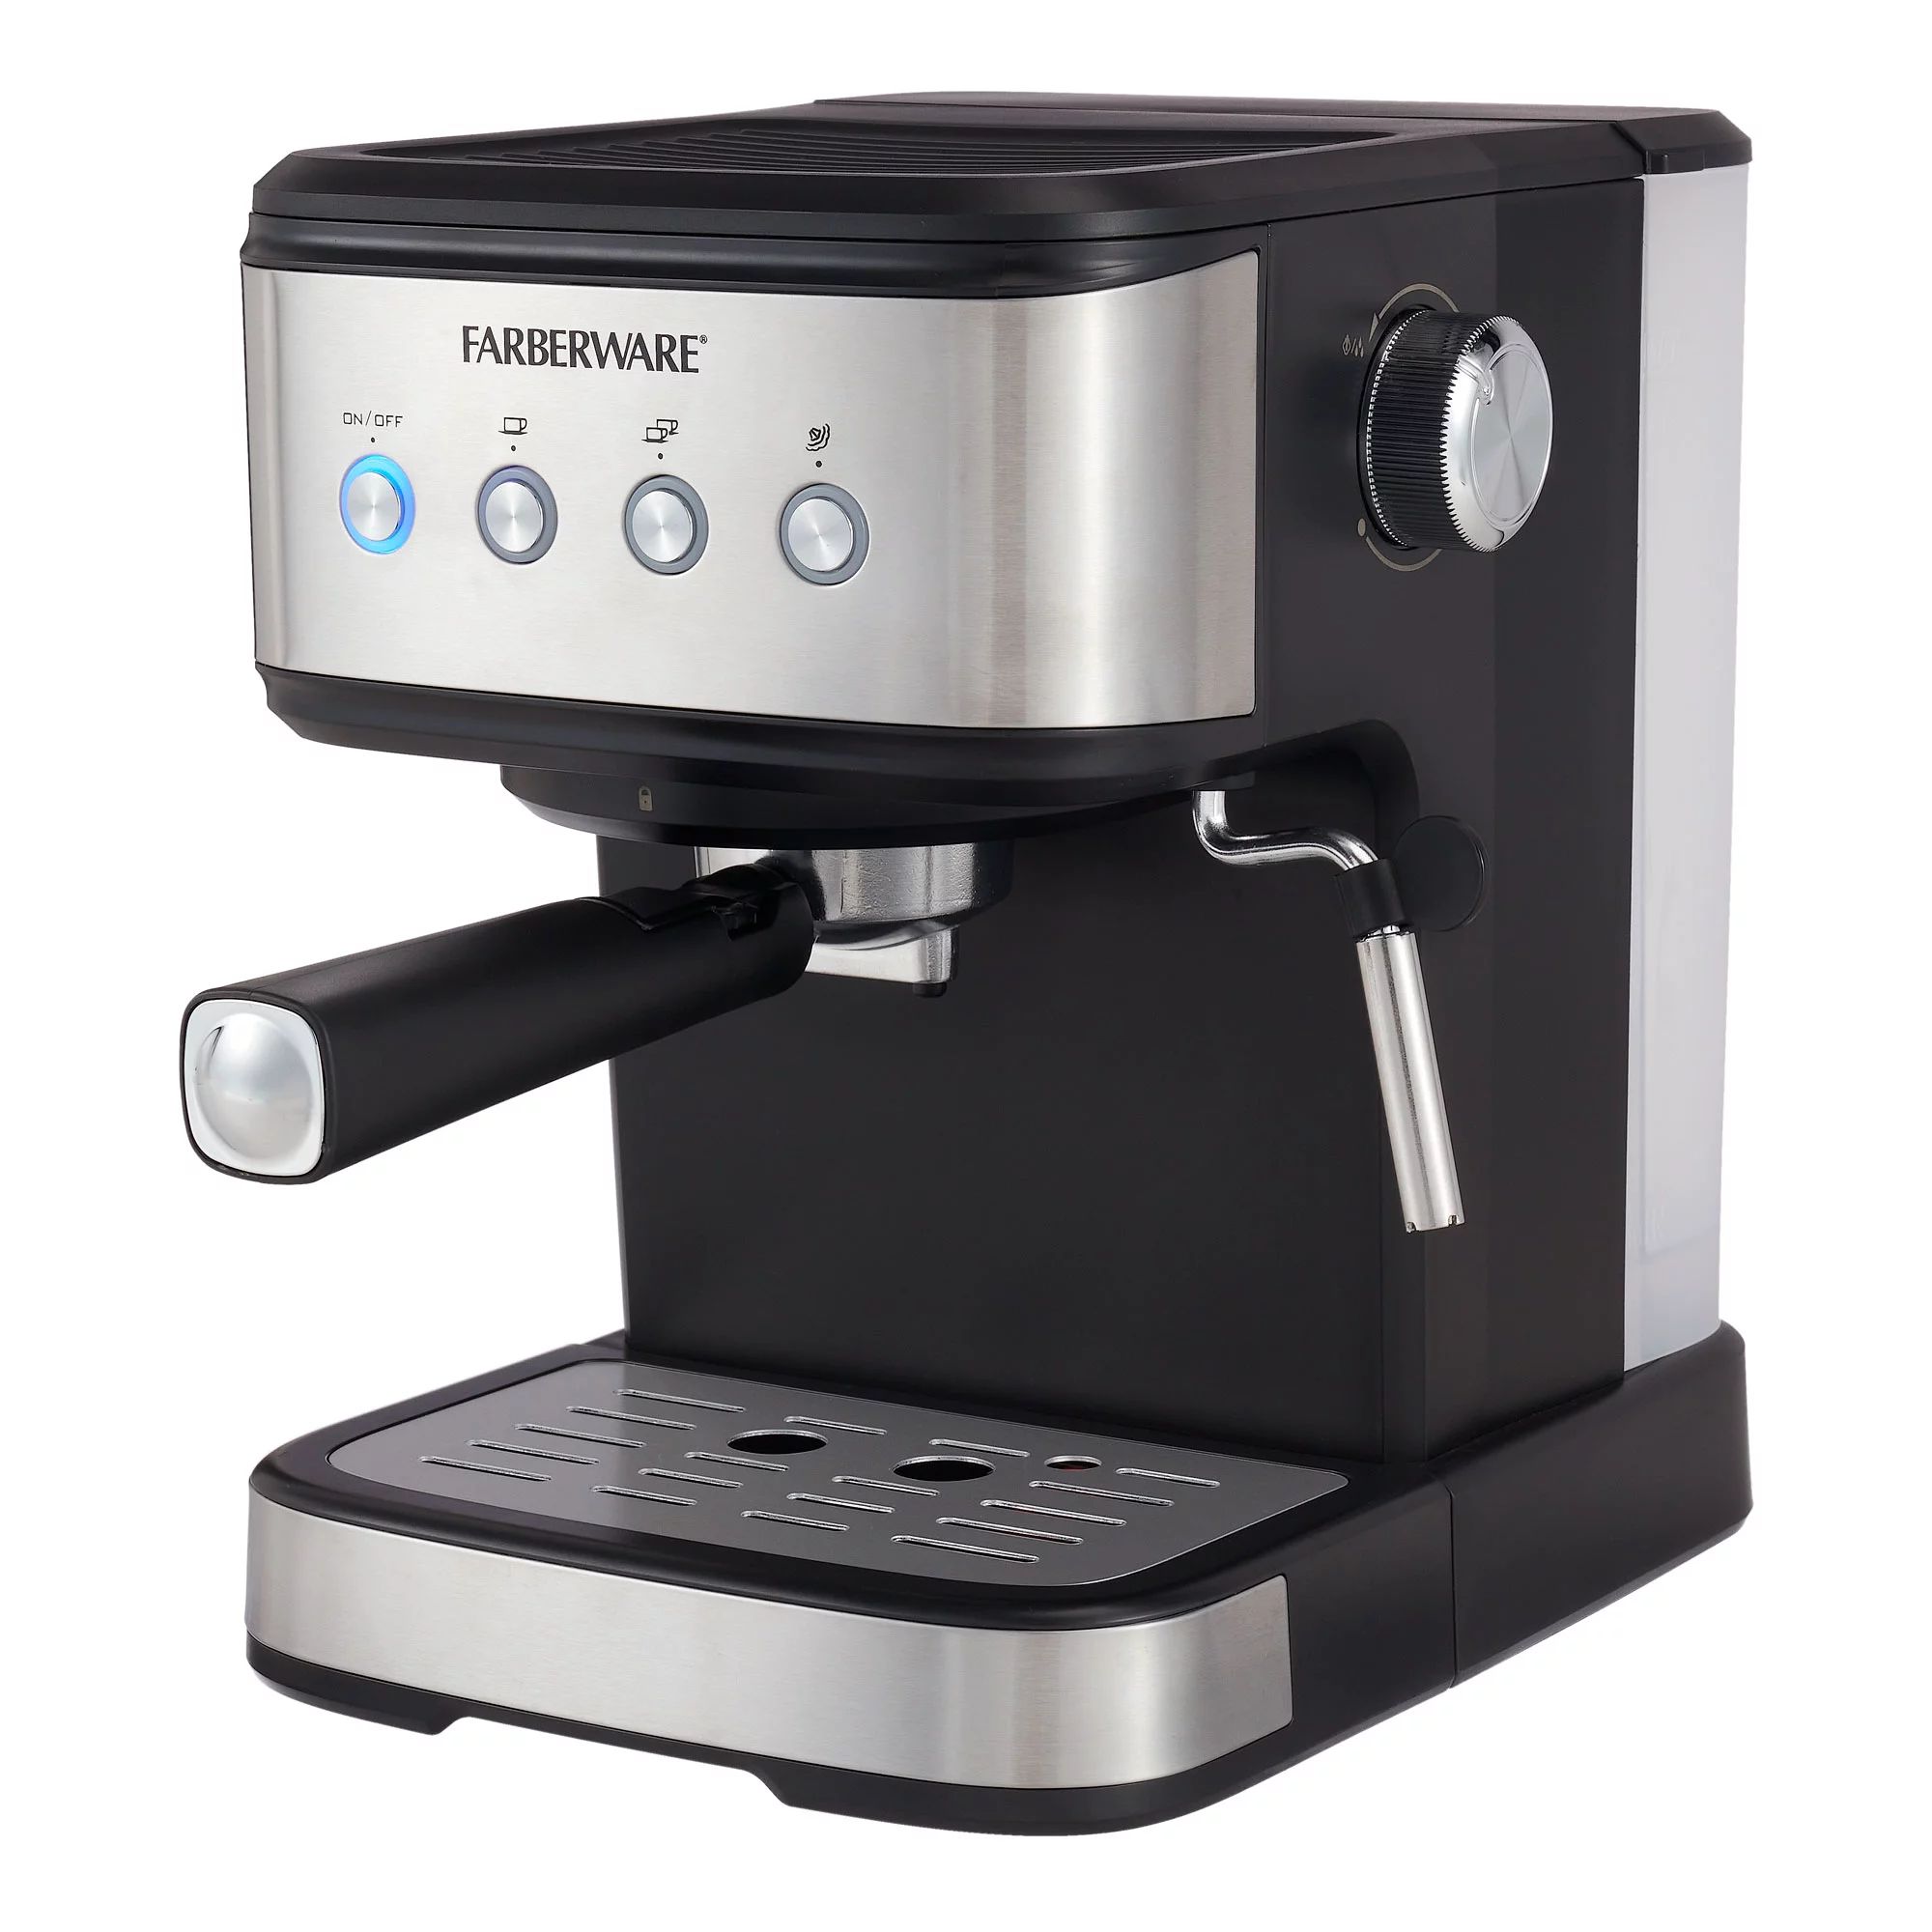 Farberware 1.5L 20 Bar Espresso Maker with Removable Water Tank, Silver and Black, New Condition | Walmart (US)